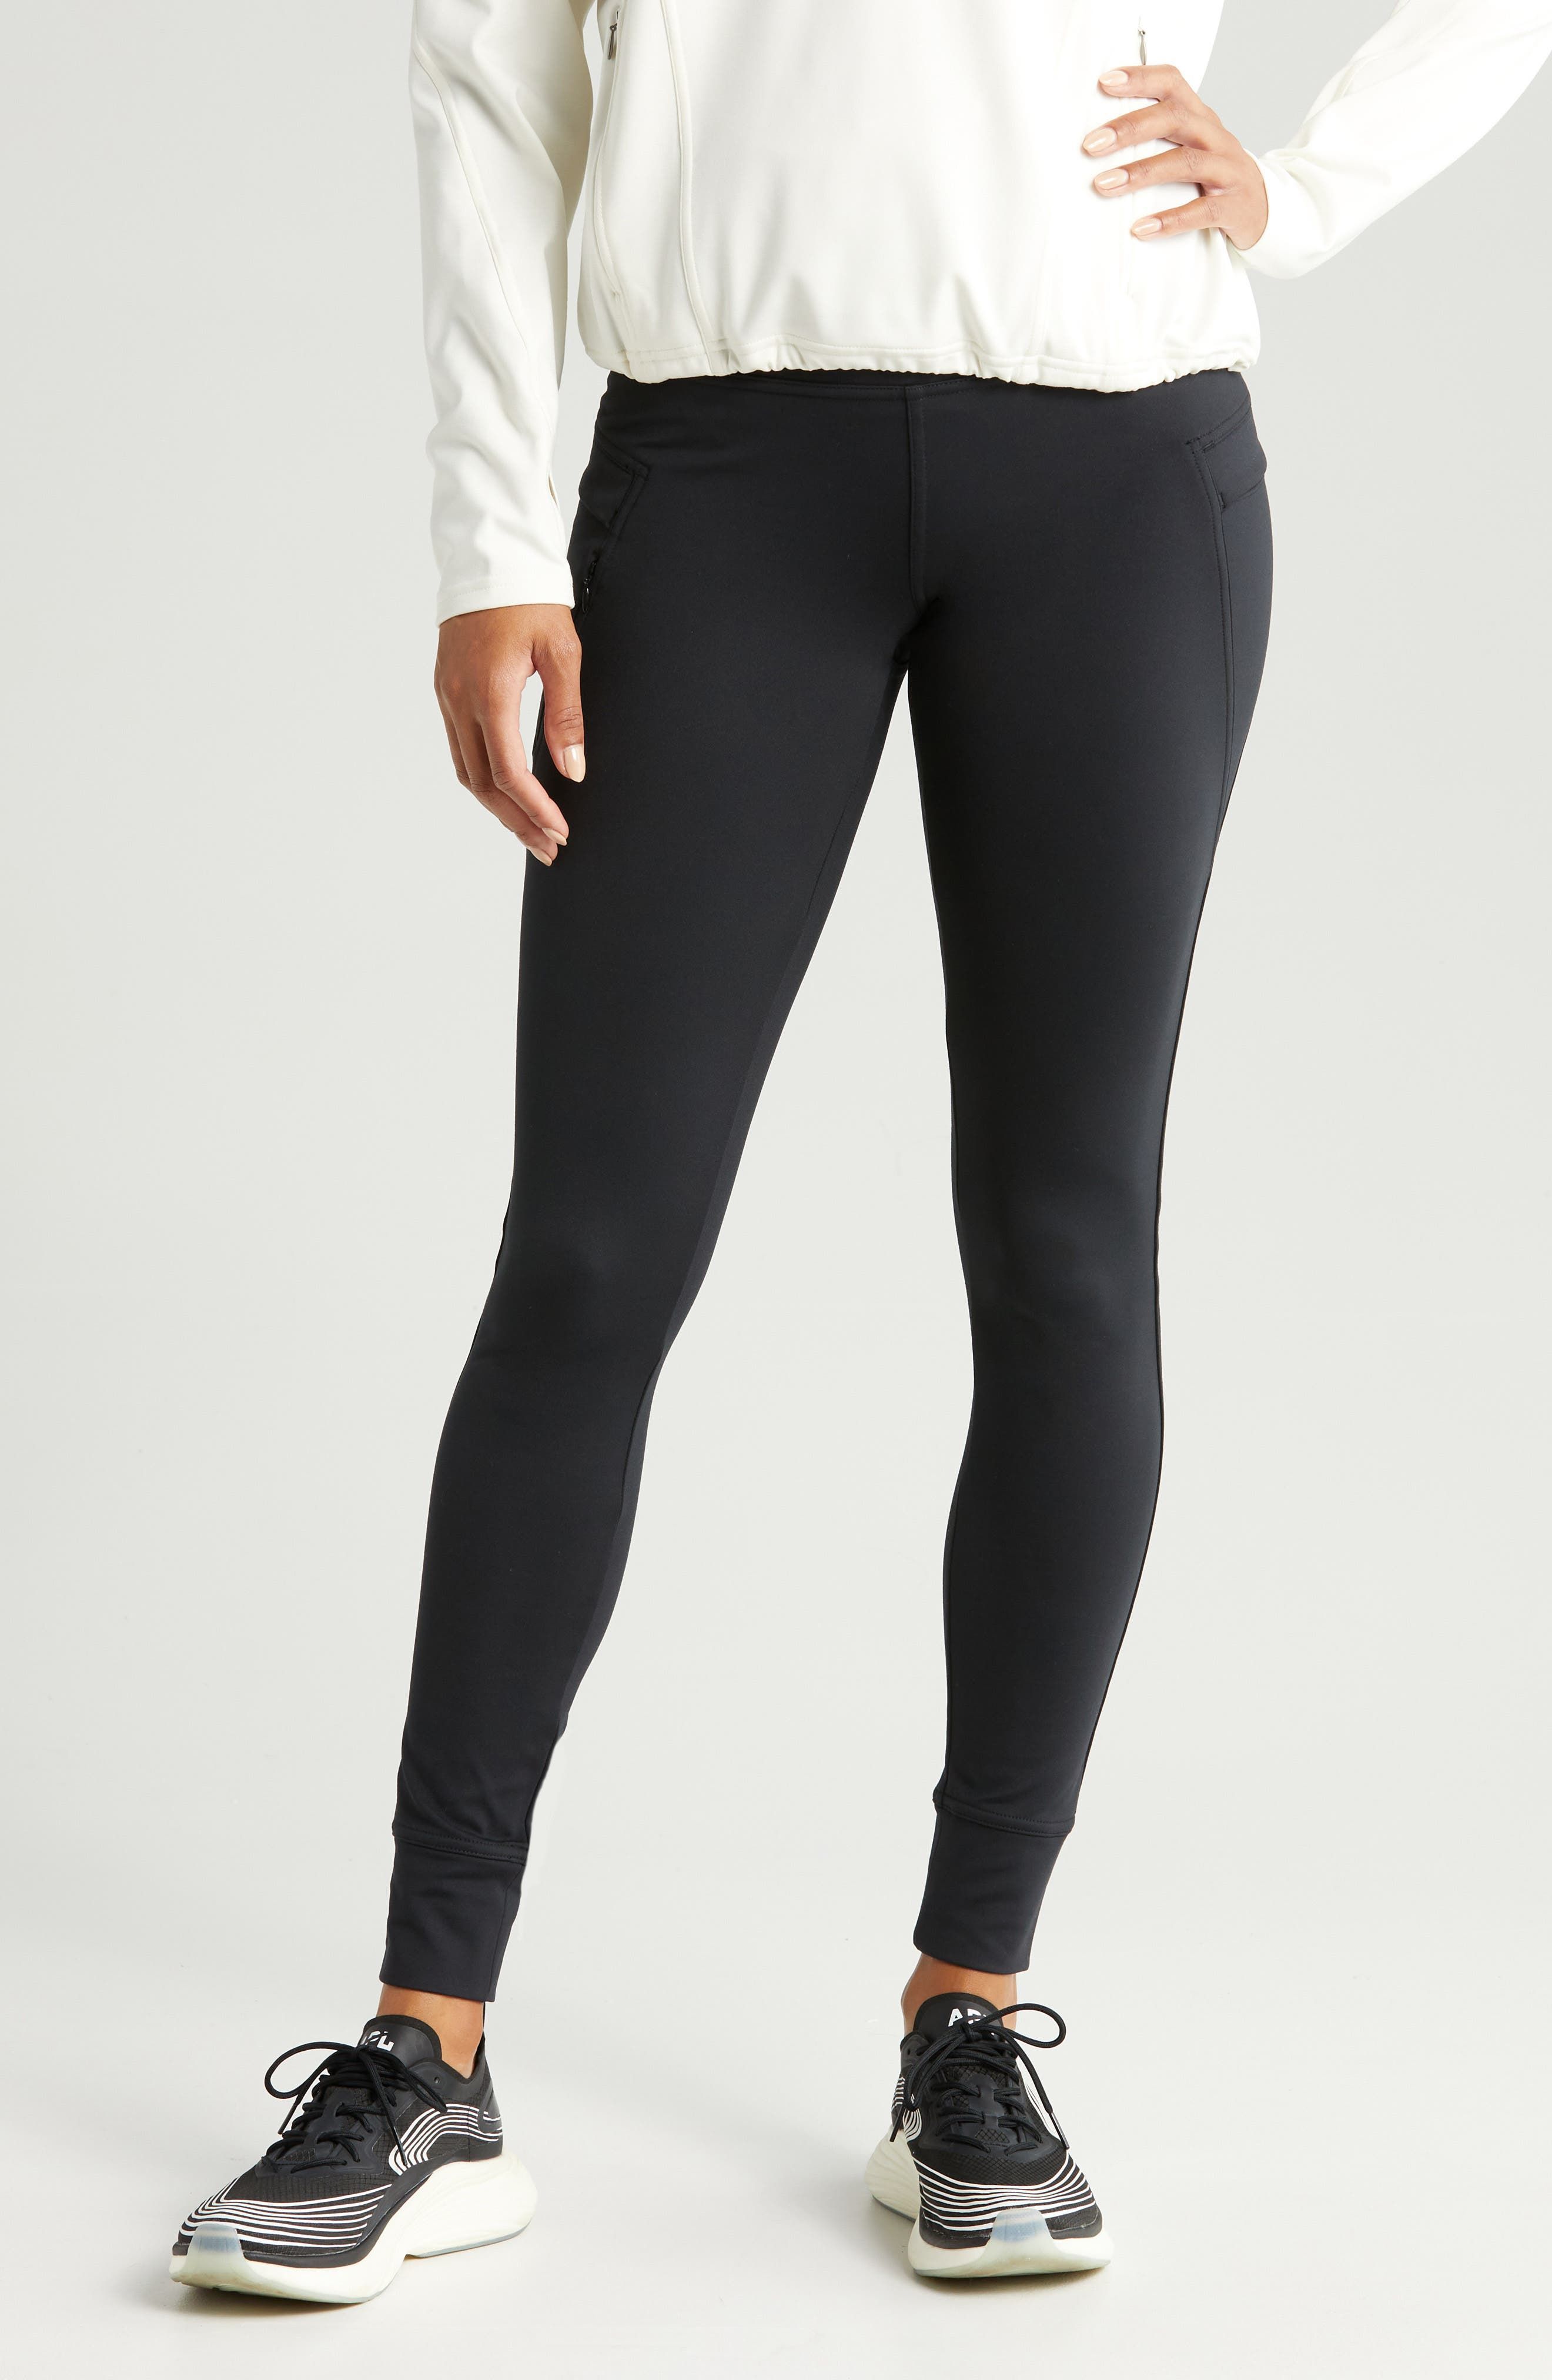 Buy Ewedoos Fleece Lined Leggings with Pockets for Women - Thermal Warm  Workout Winter Leggings for Women Yoga Pants for Women at Amazon.in